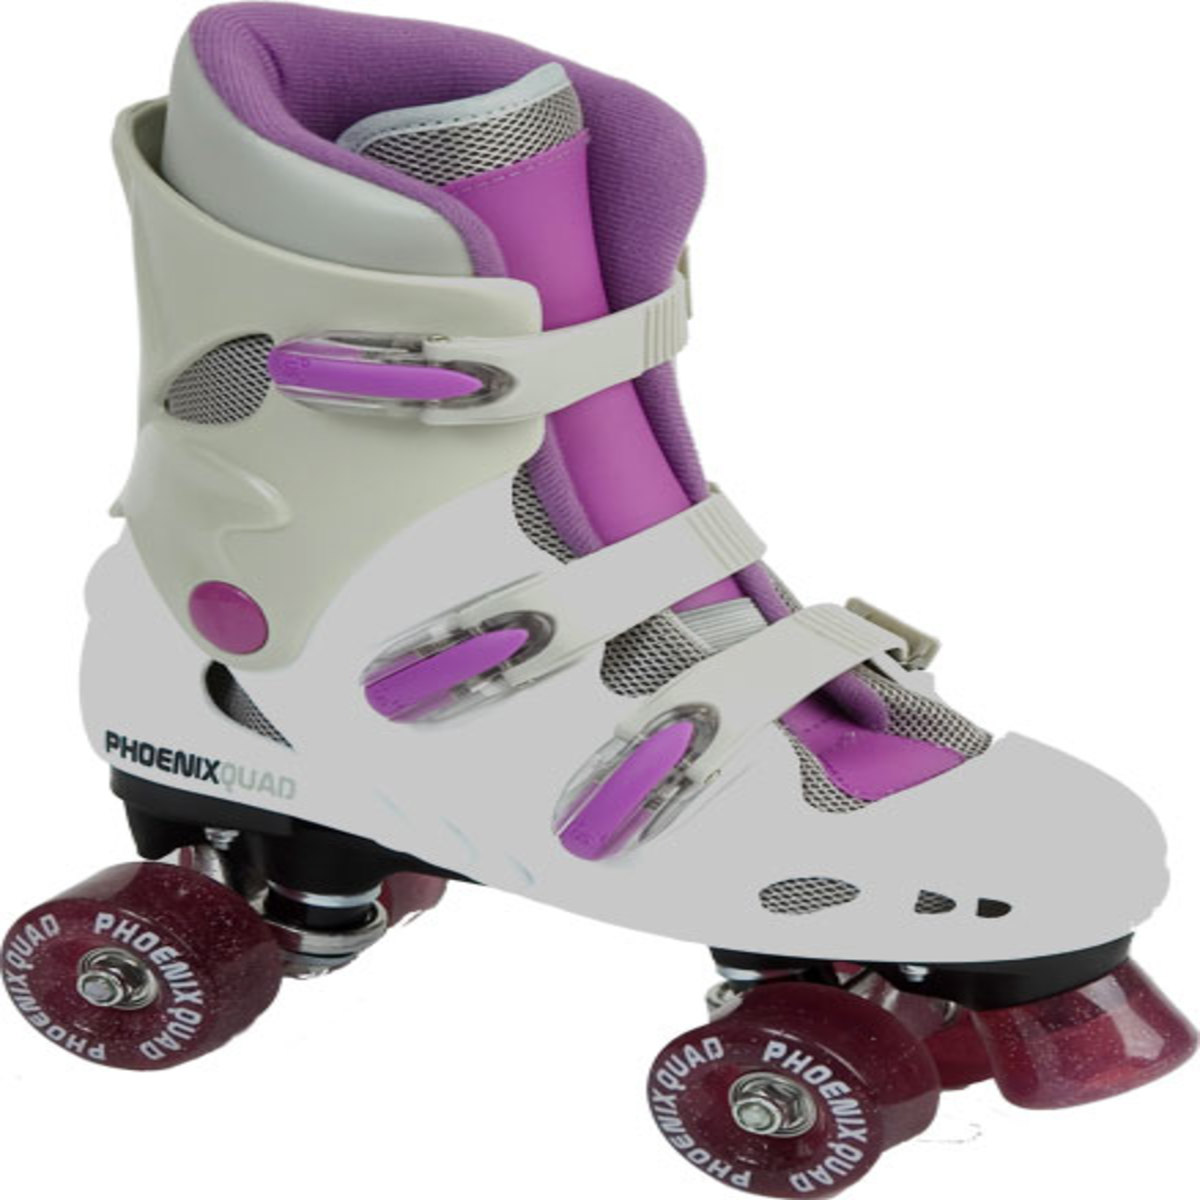  Phoenix Quad Skates - Pink - Size 6